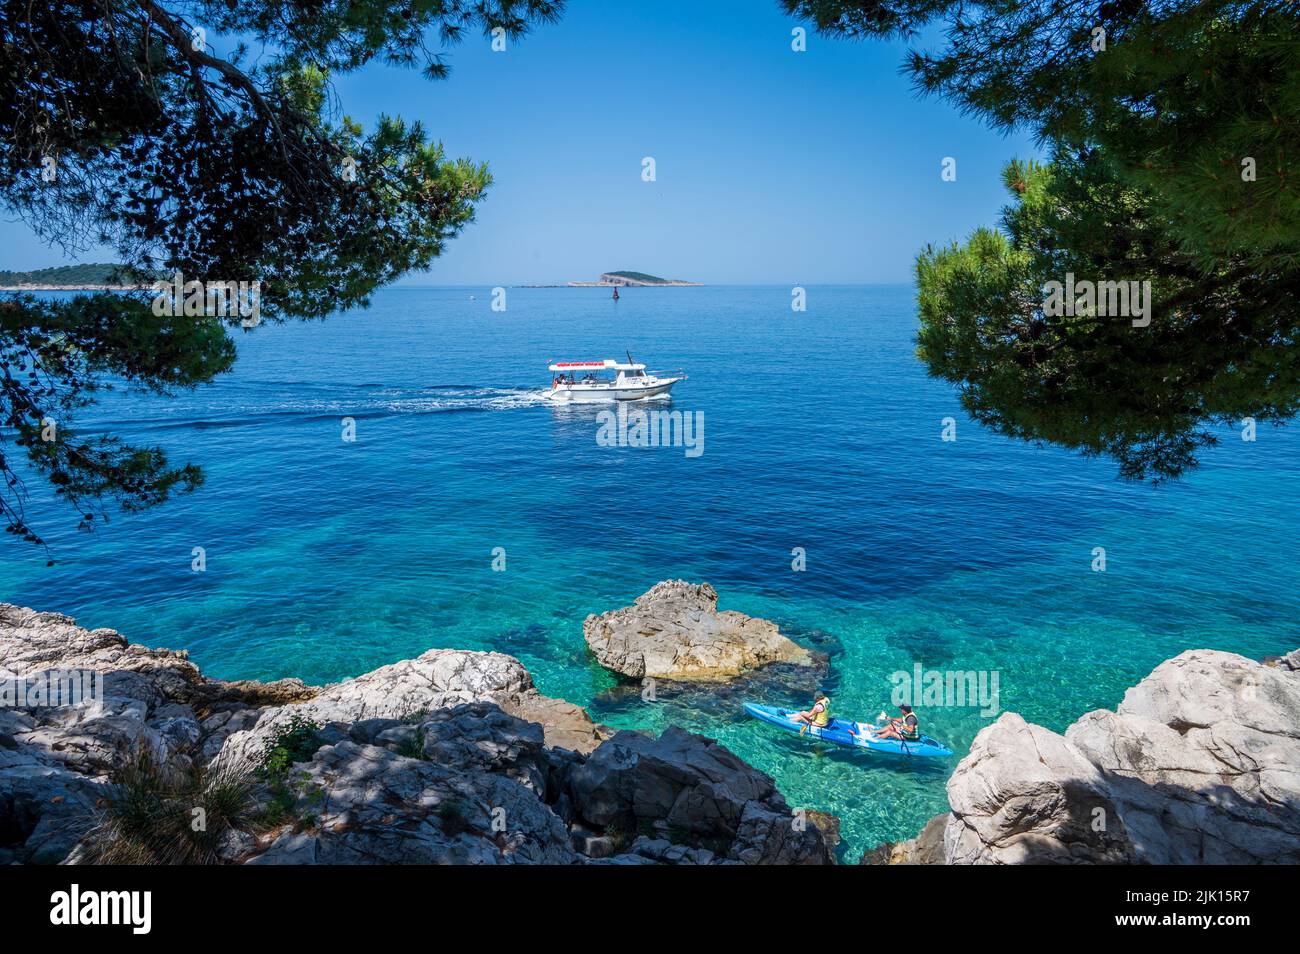 Tourist boat on the Adriatic Sea, Cavtat, Dubrovnik Riviera, Croatia, Europe Stock Photo